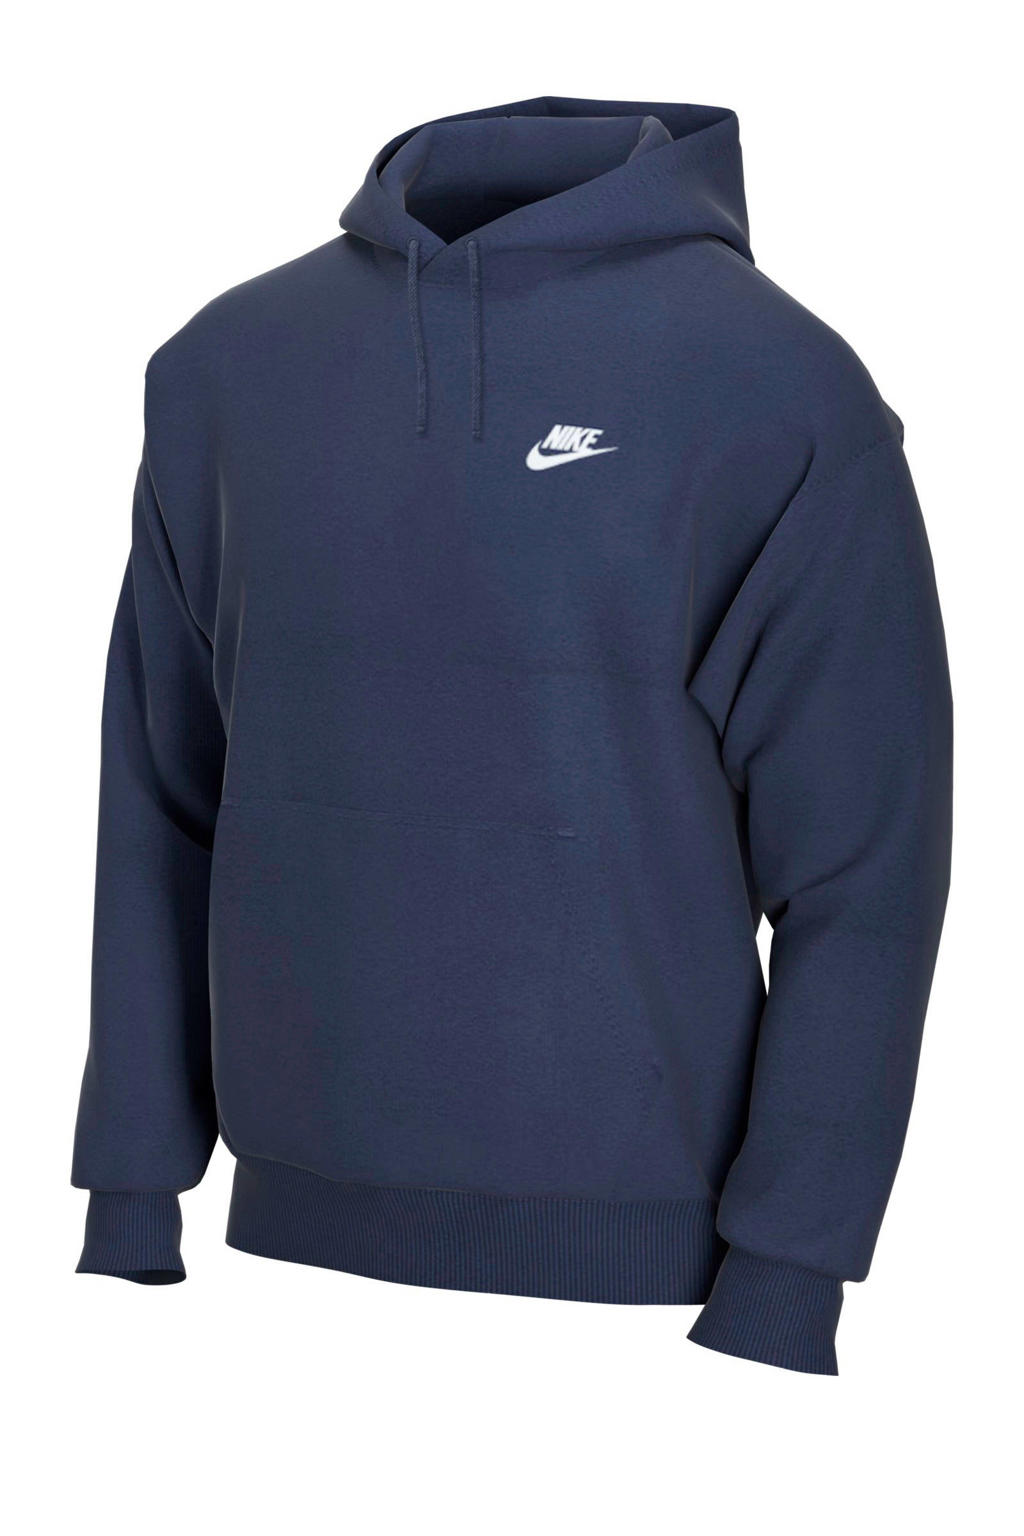 Blauwe heren Nike hoodie van katoen met melée print, lange mouwen en capuchon